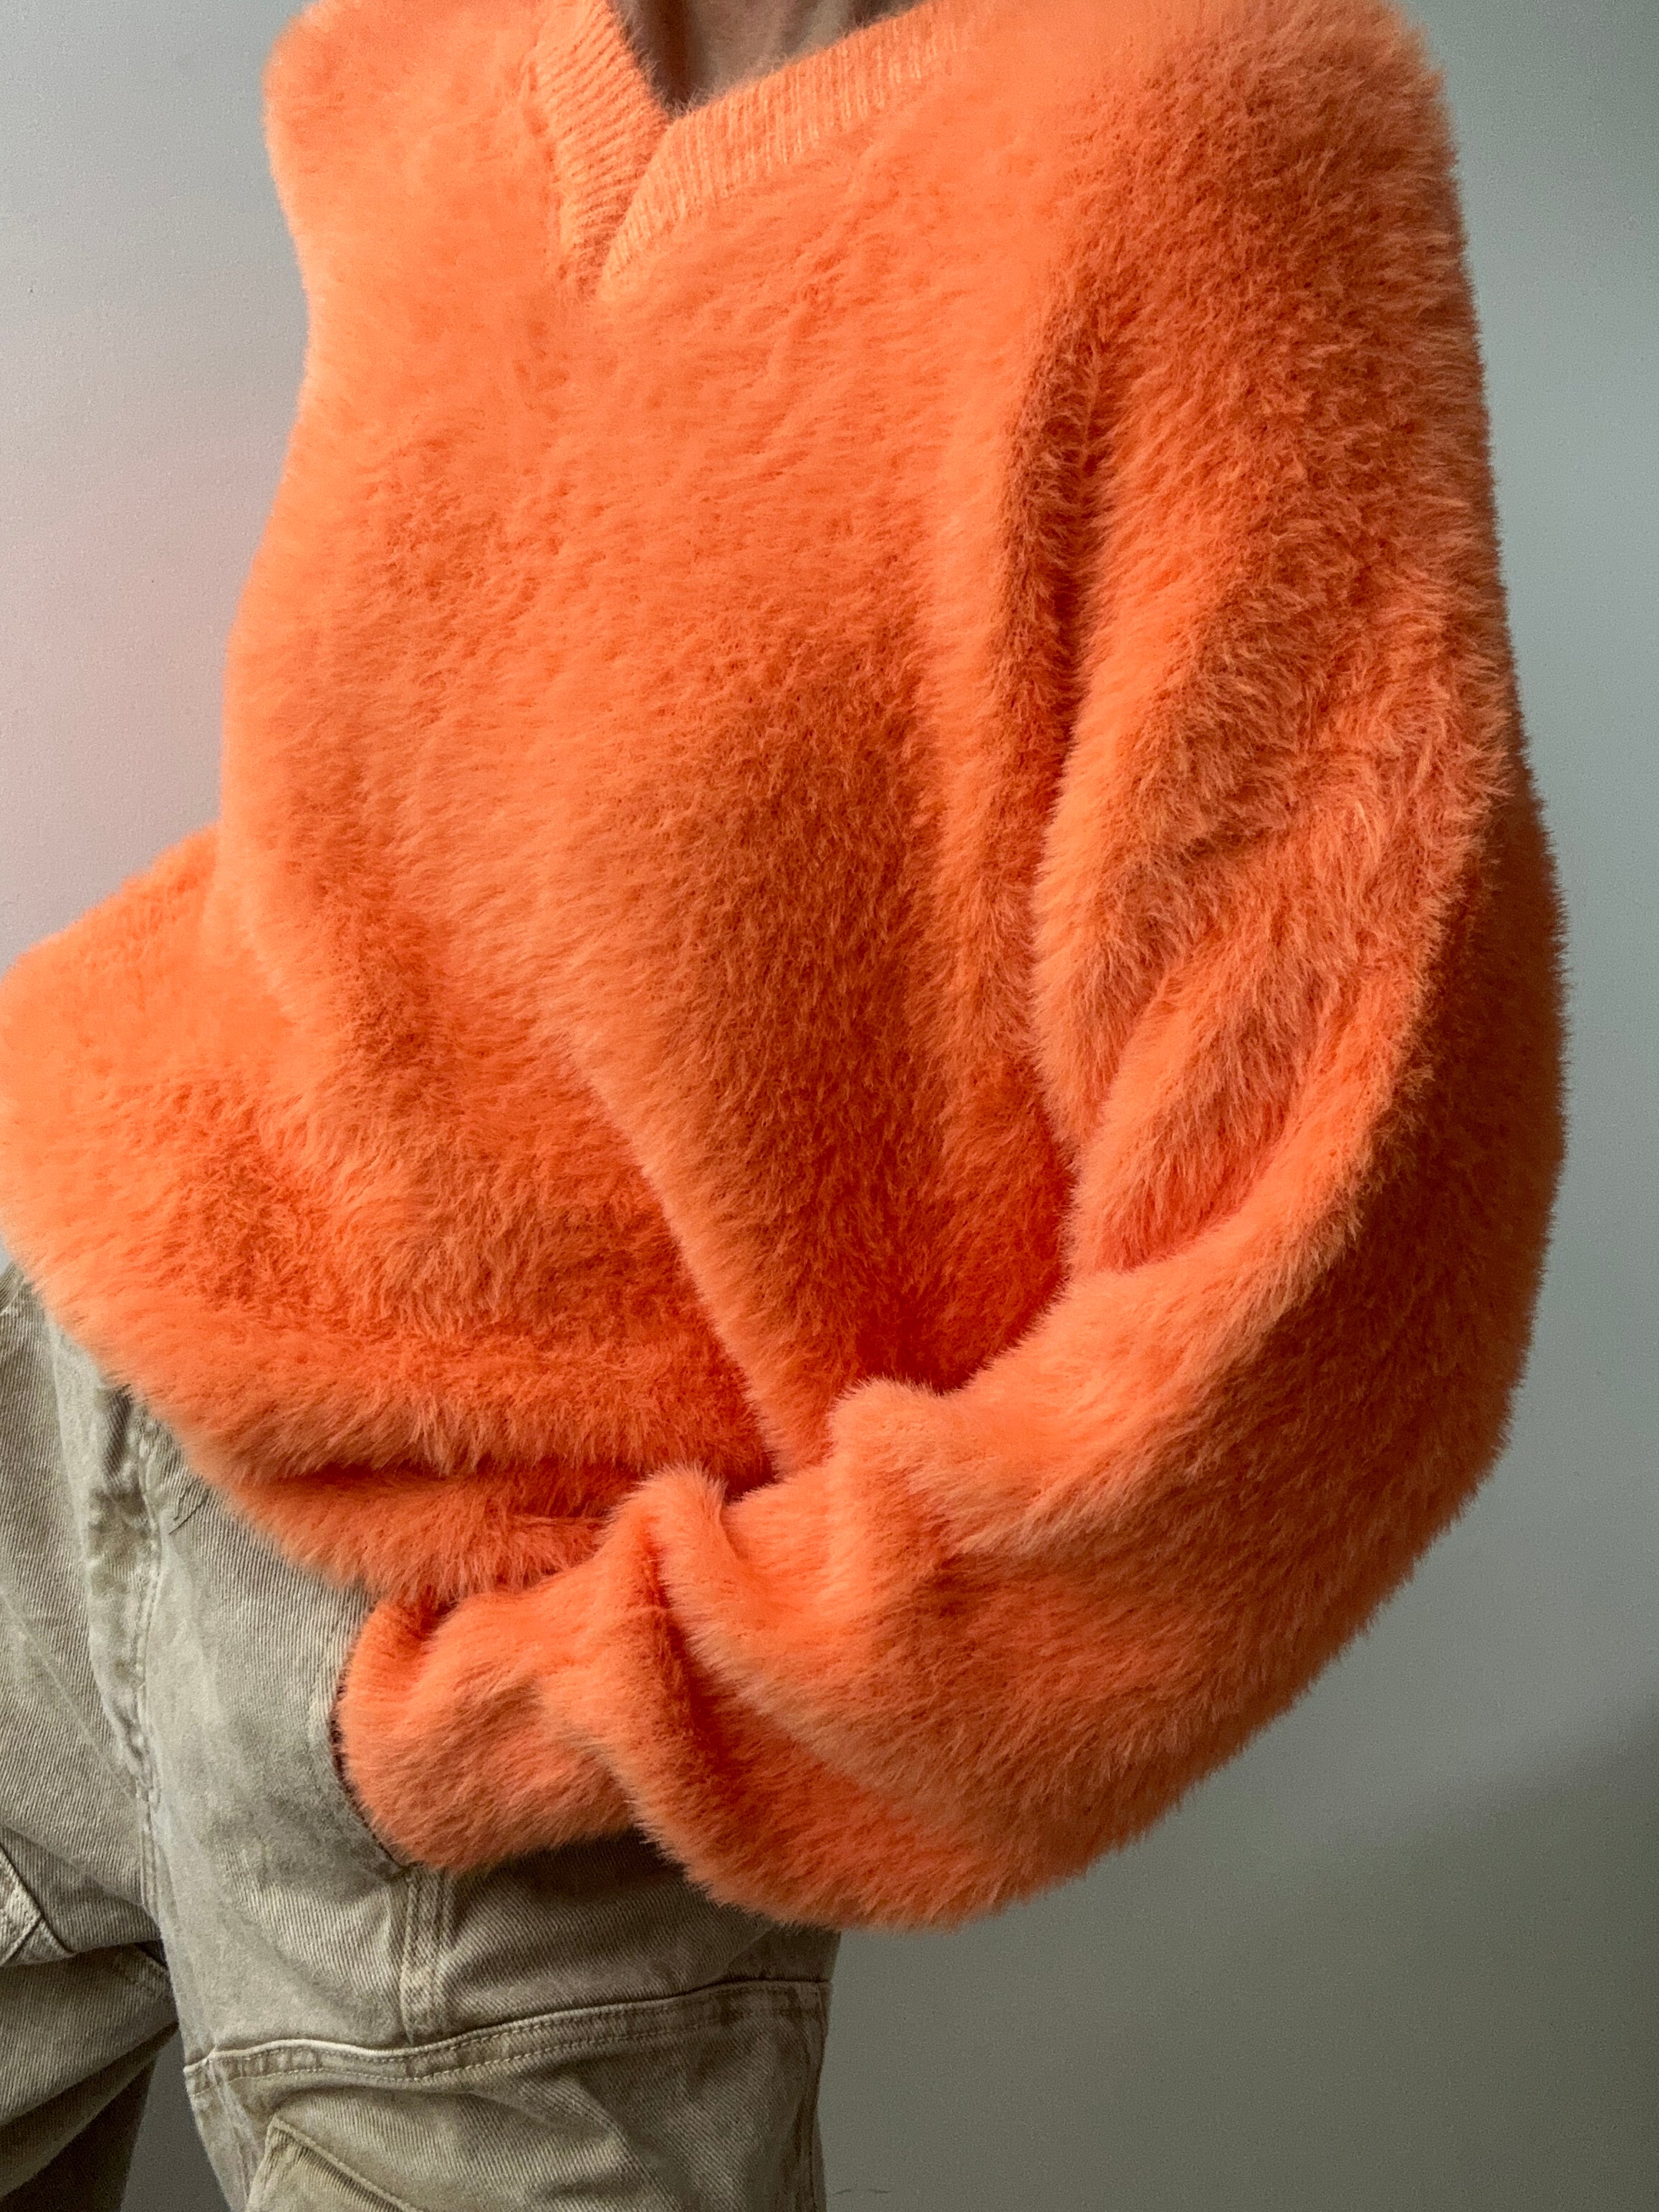 Future Nomads Jumpers Small-Medium V Neck Soft Knit Orange